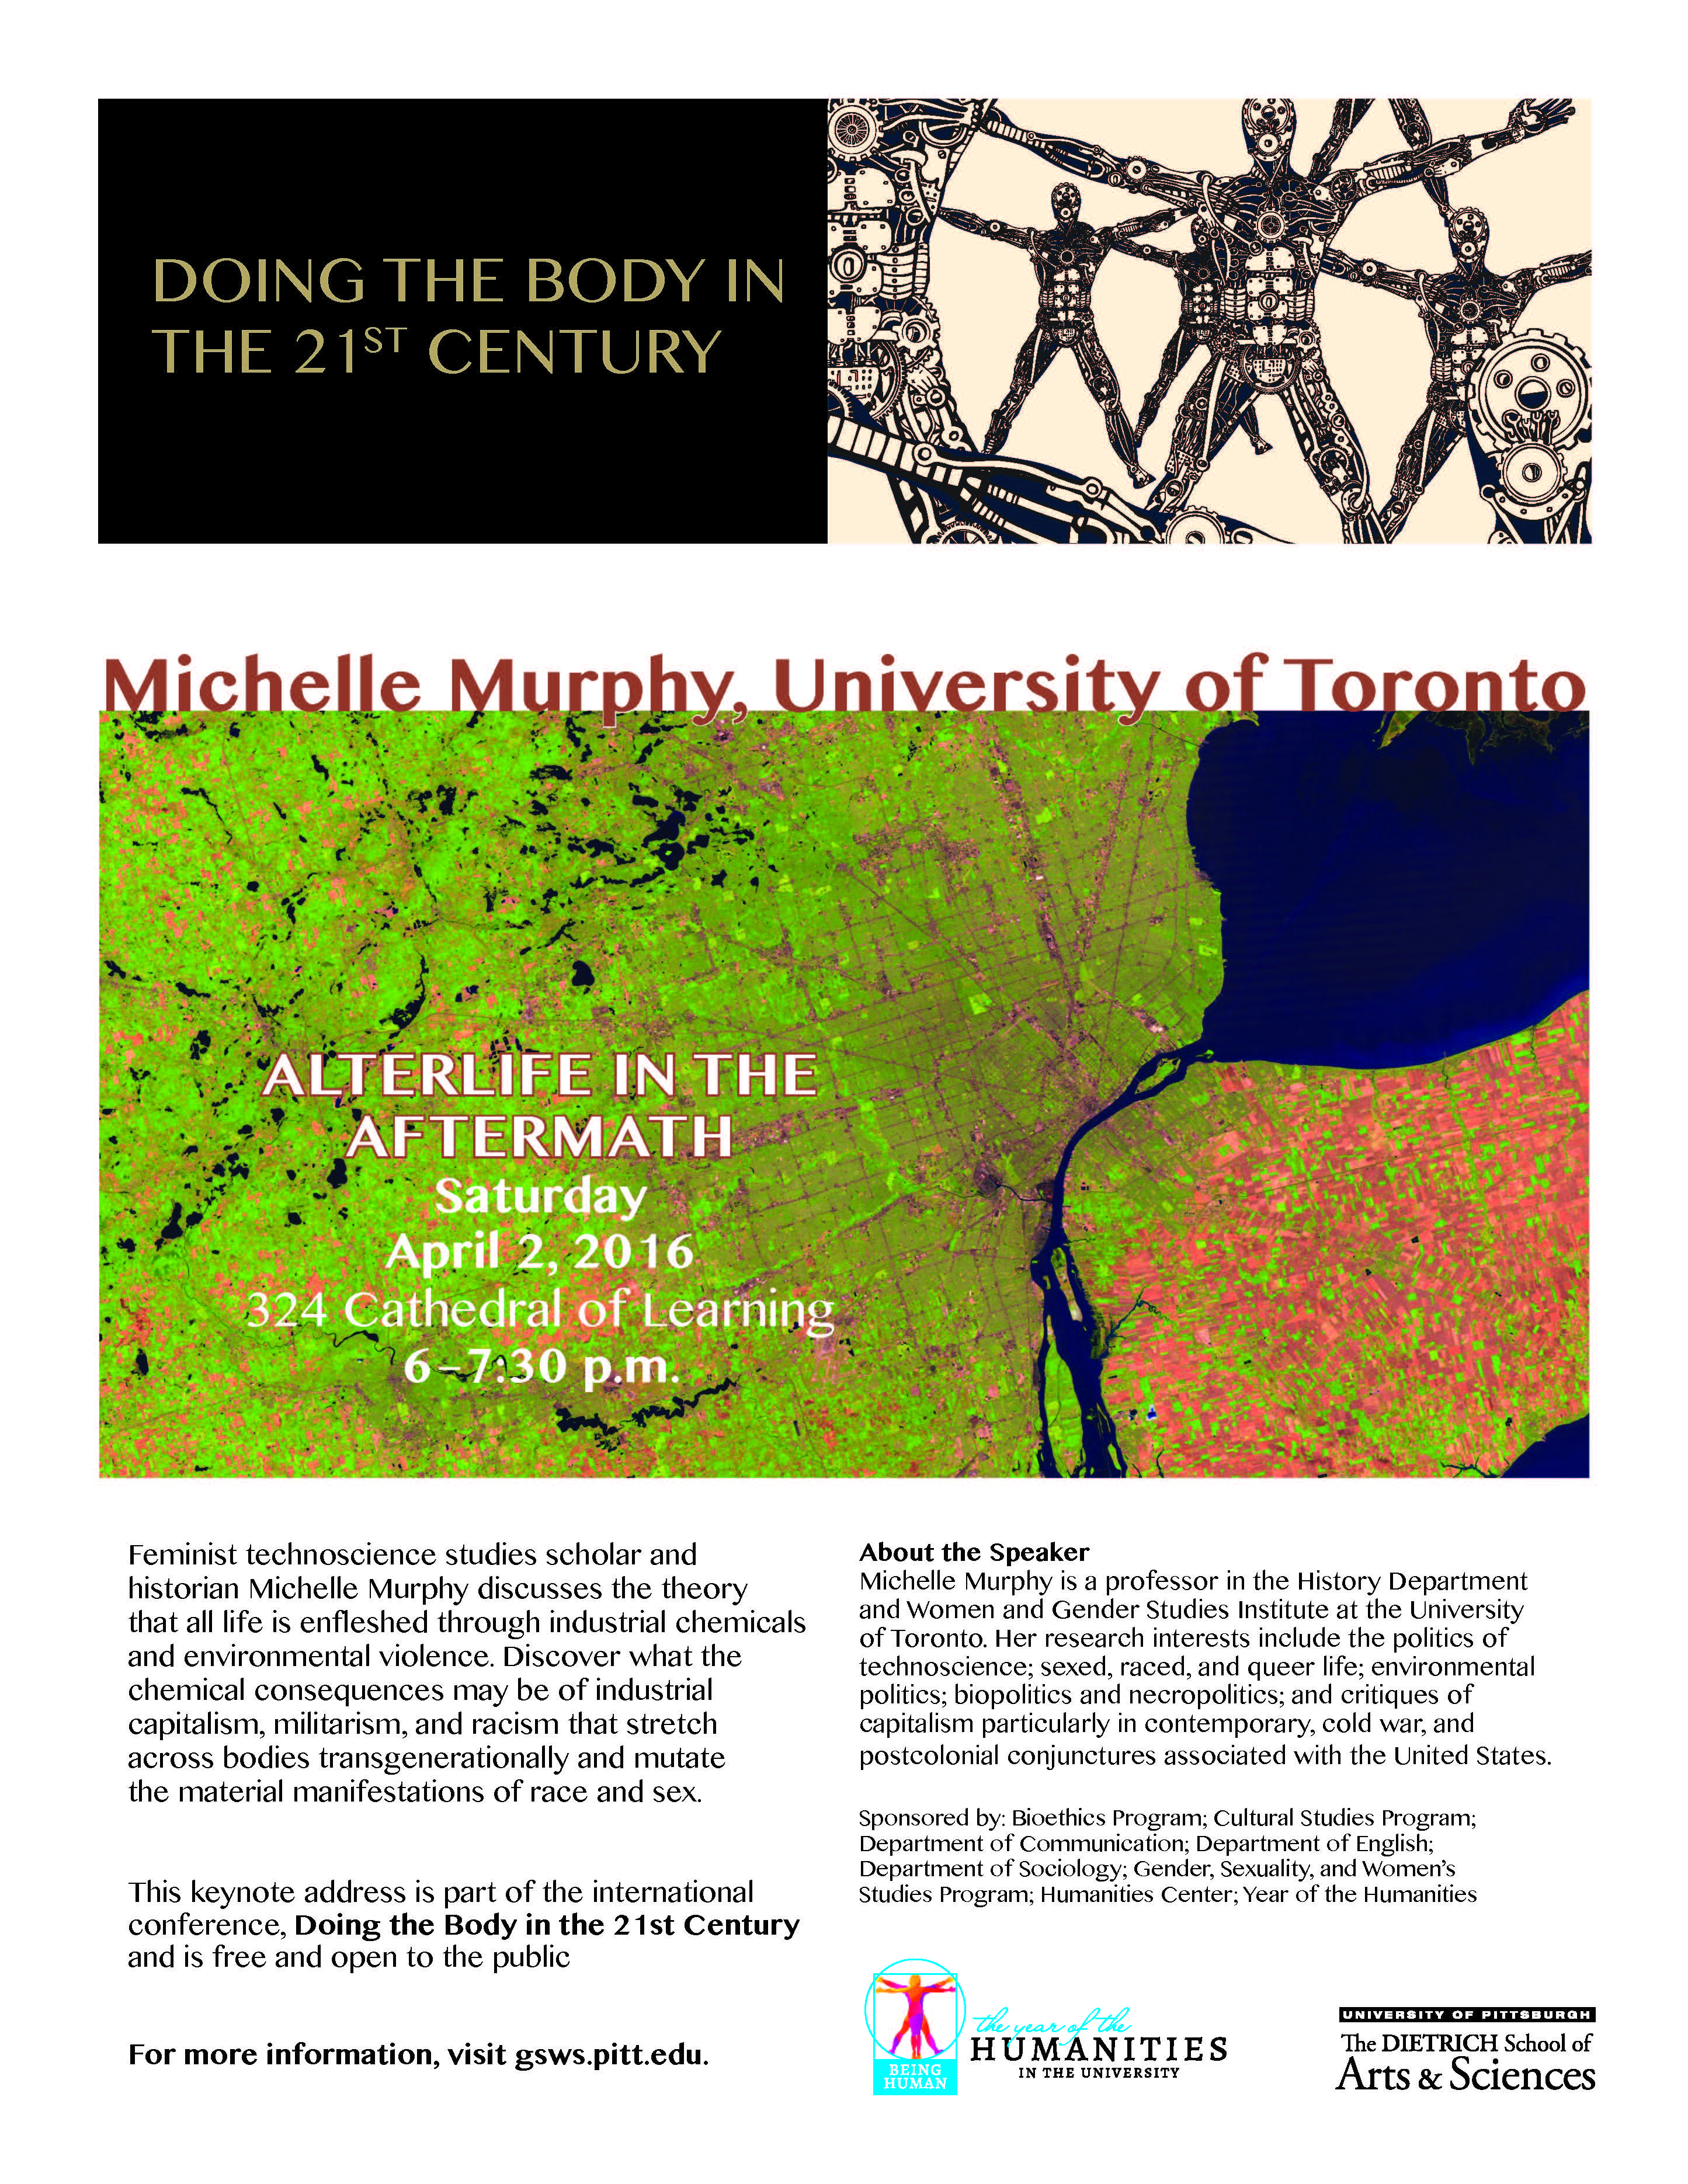 Keynote address by Dr. Michelle Murphy